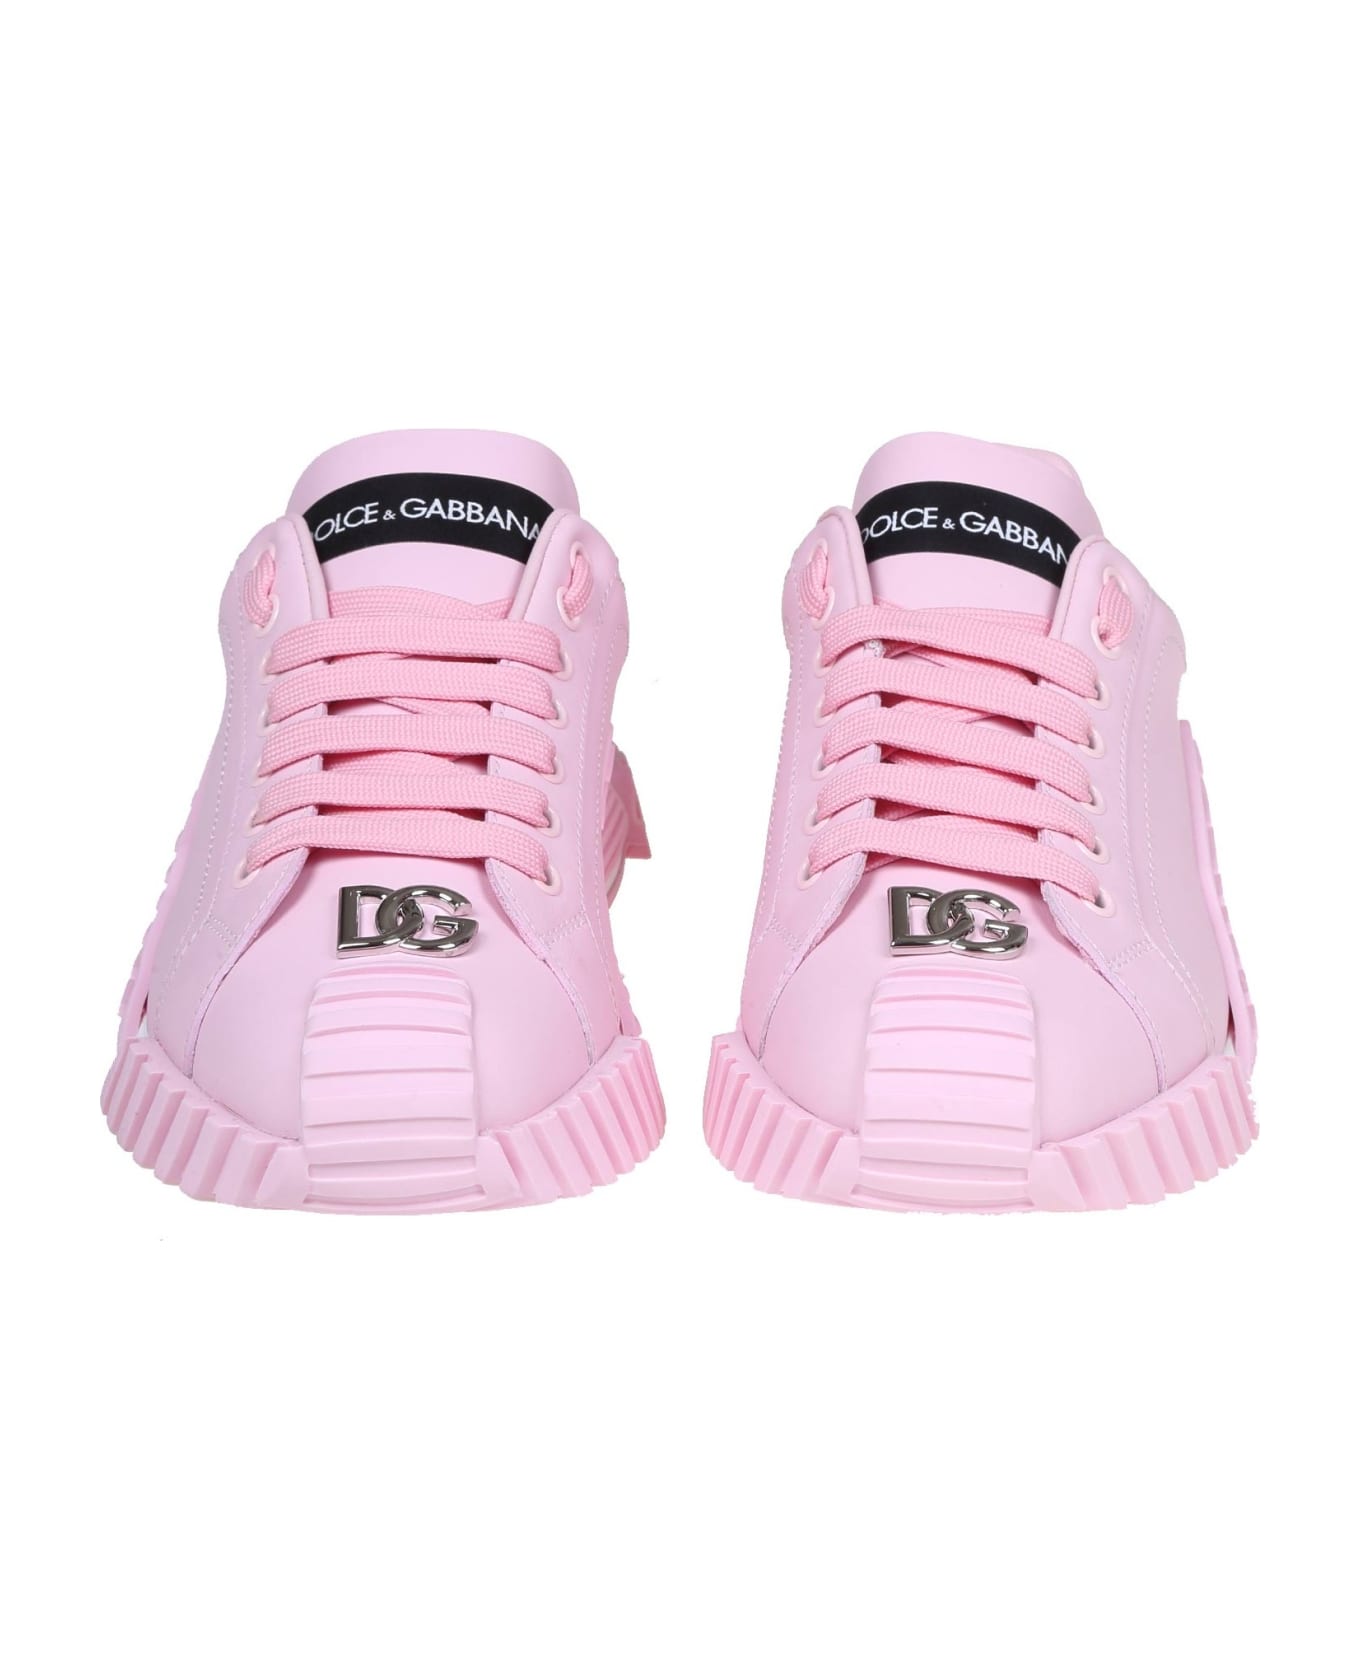 Dolce & Gabbana Sneakers - PINK スニーカー